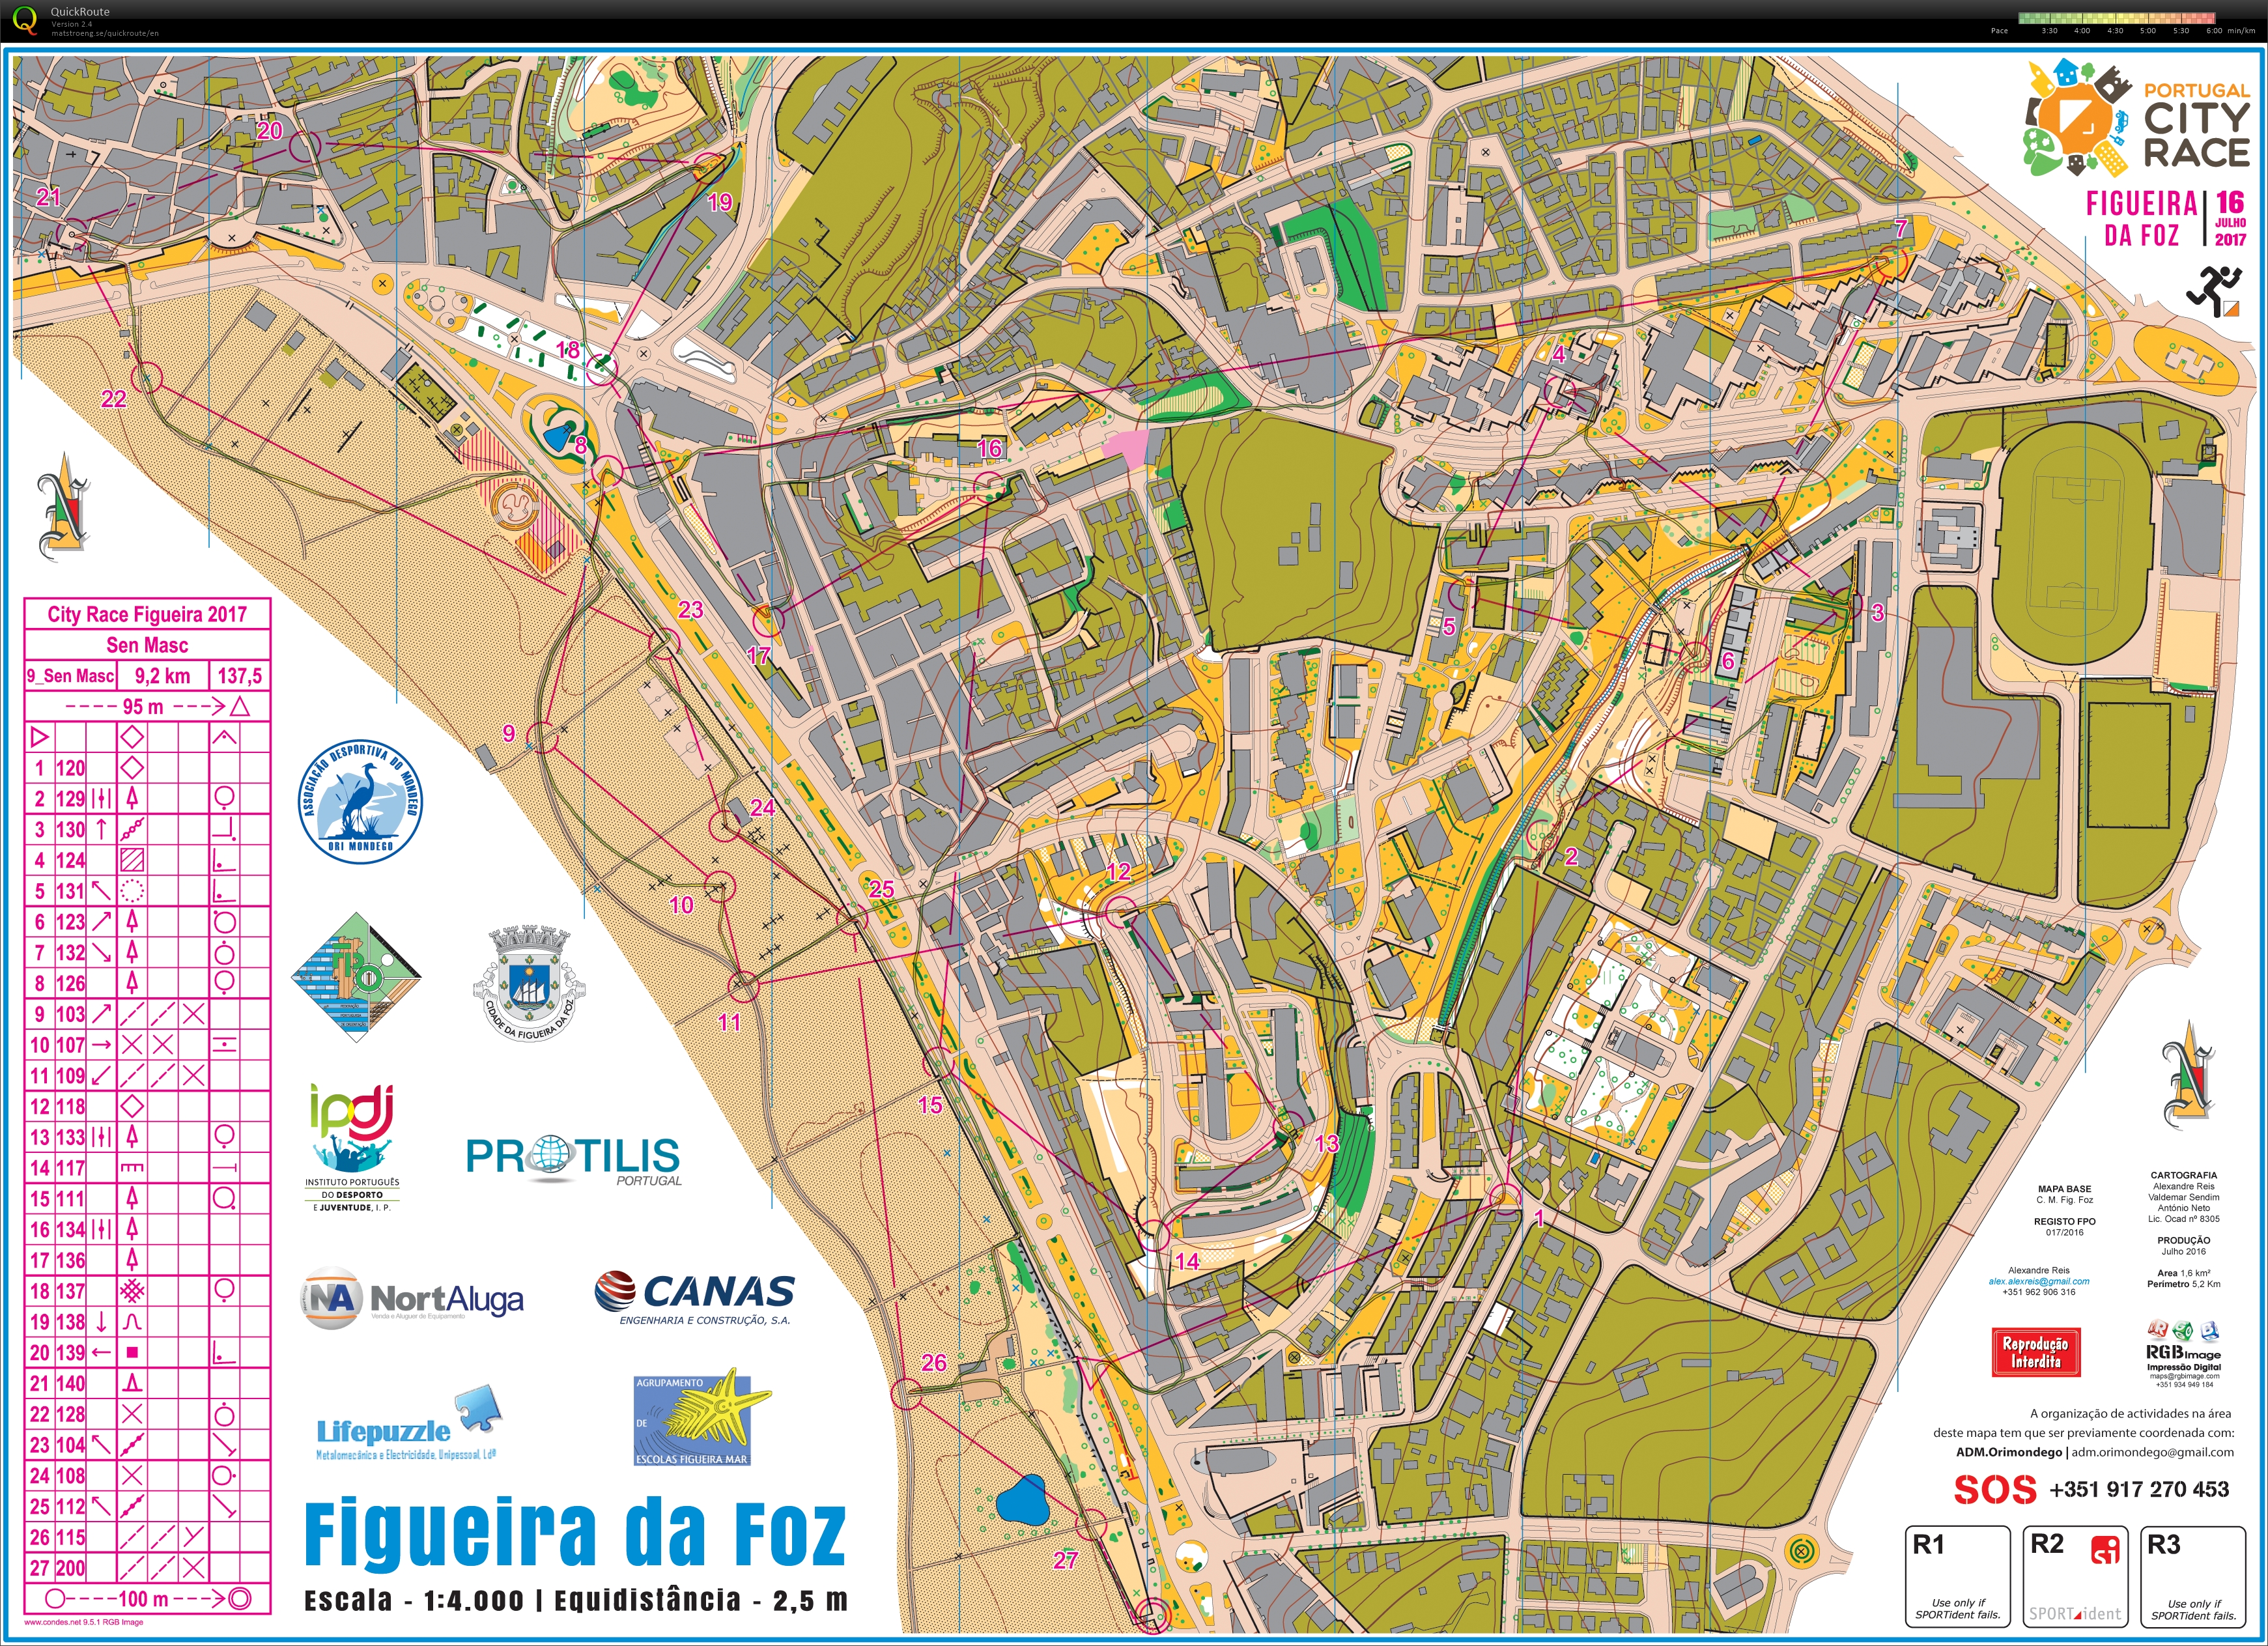 City Race Figueira da Foz 9km (15/07/2017)